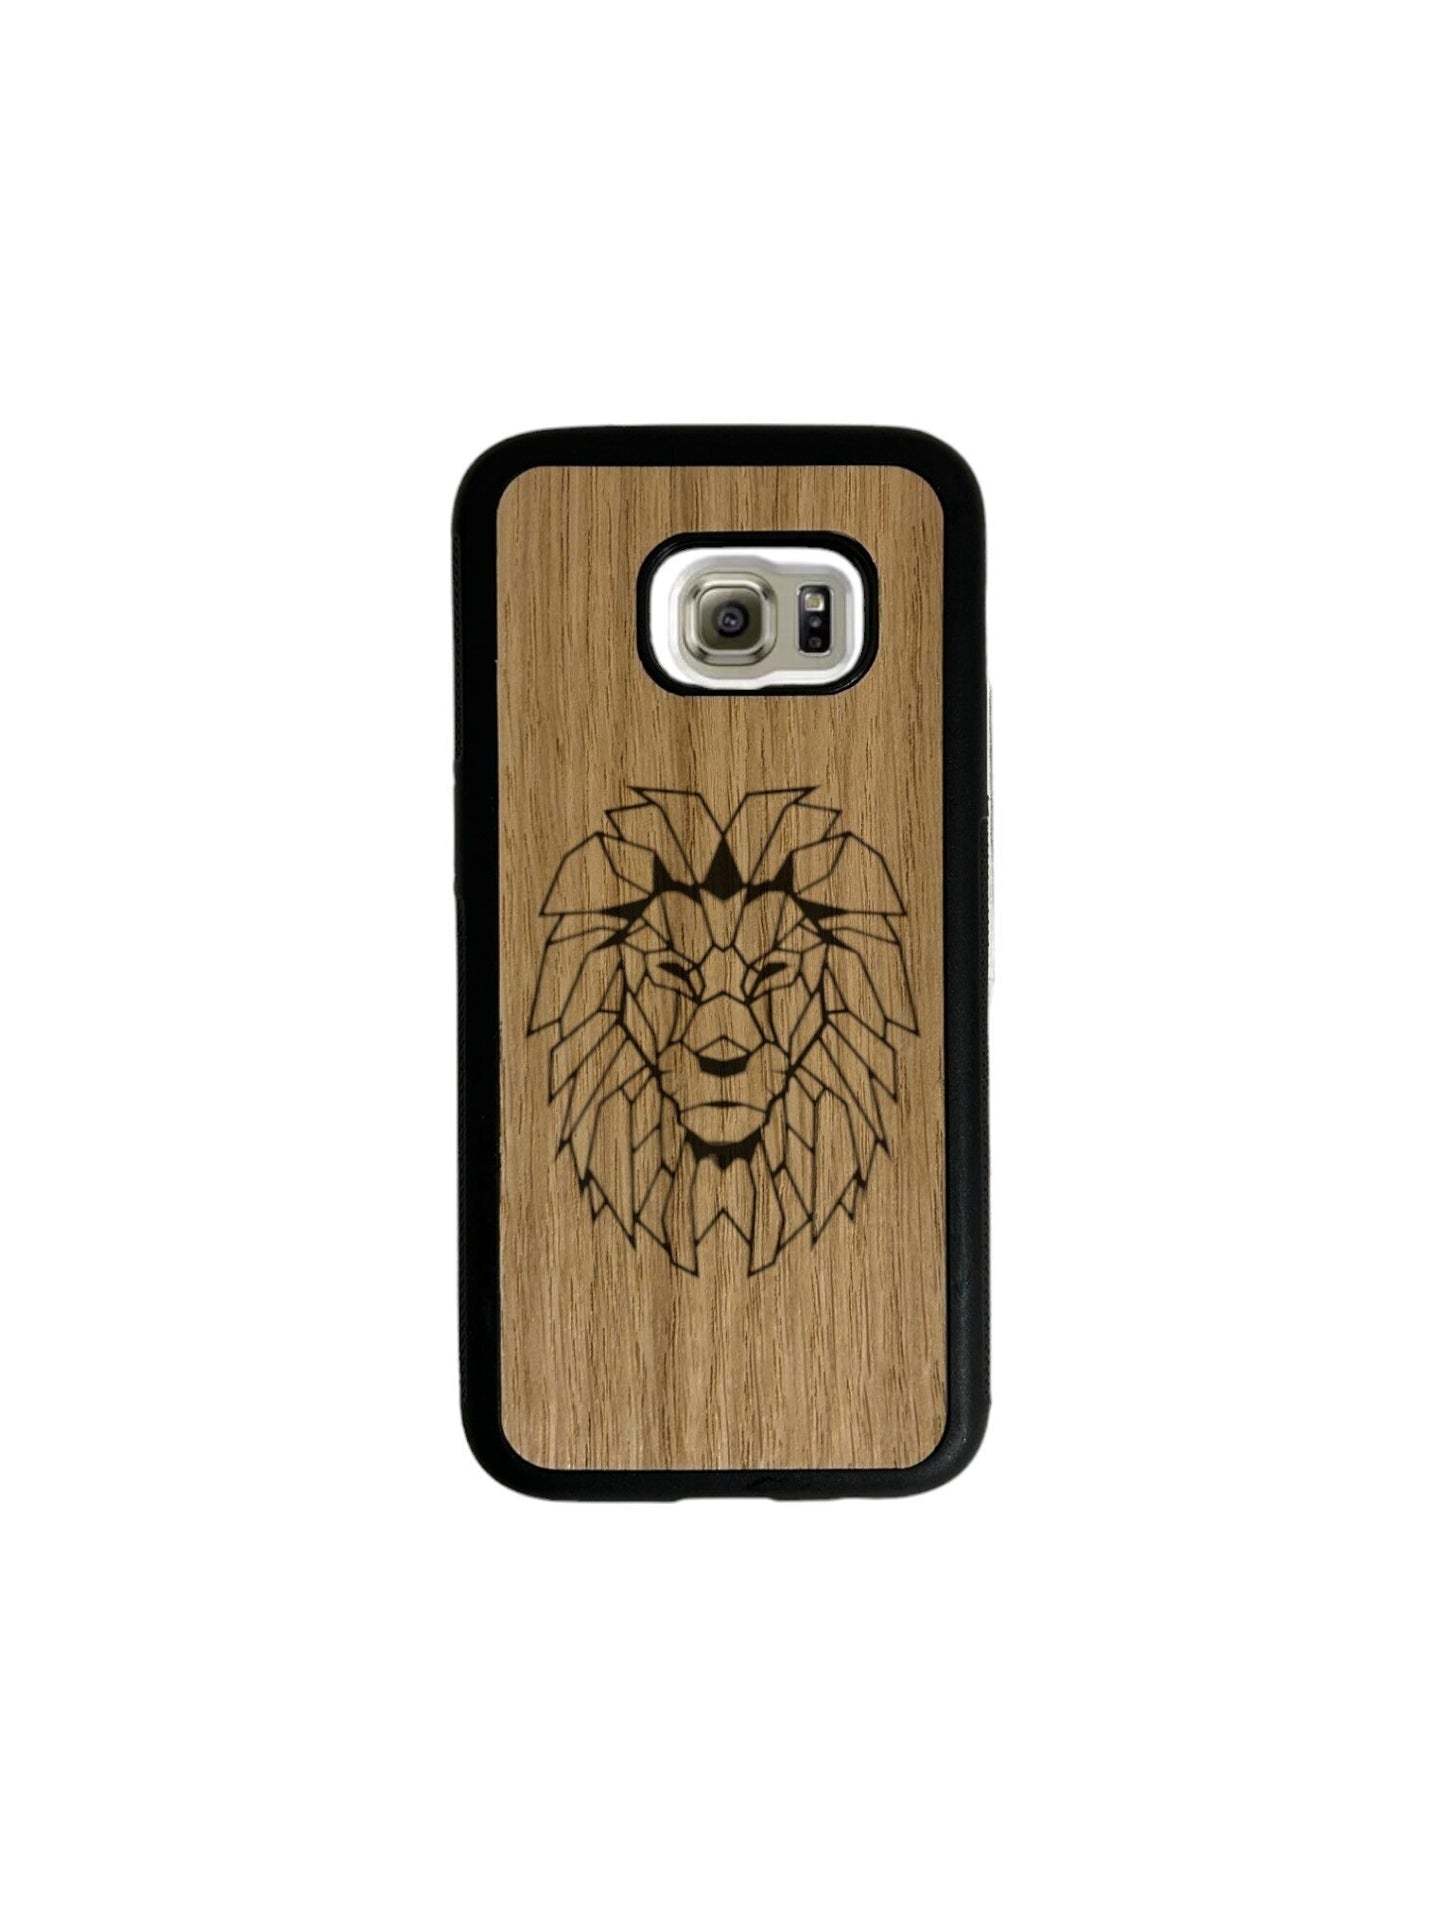 Samsung Galaxy S case - Lion engraving